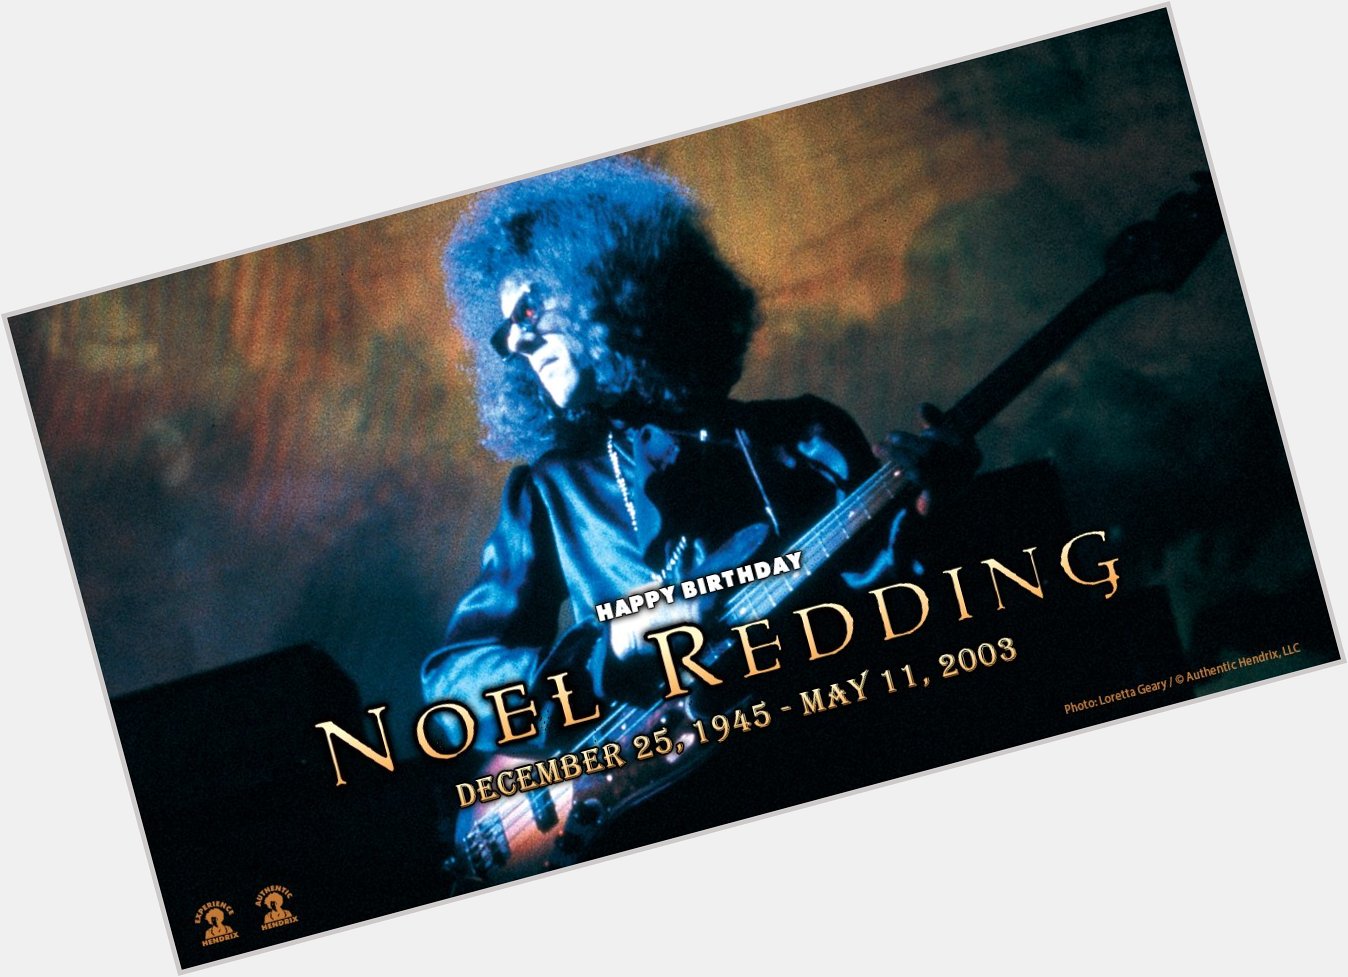 Happy Birthday to Noel Redding
December 25, 1945 - May 11, 2003  